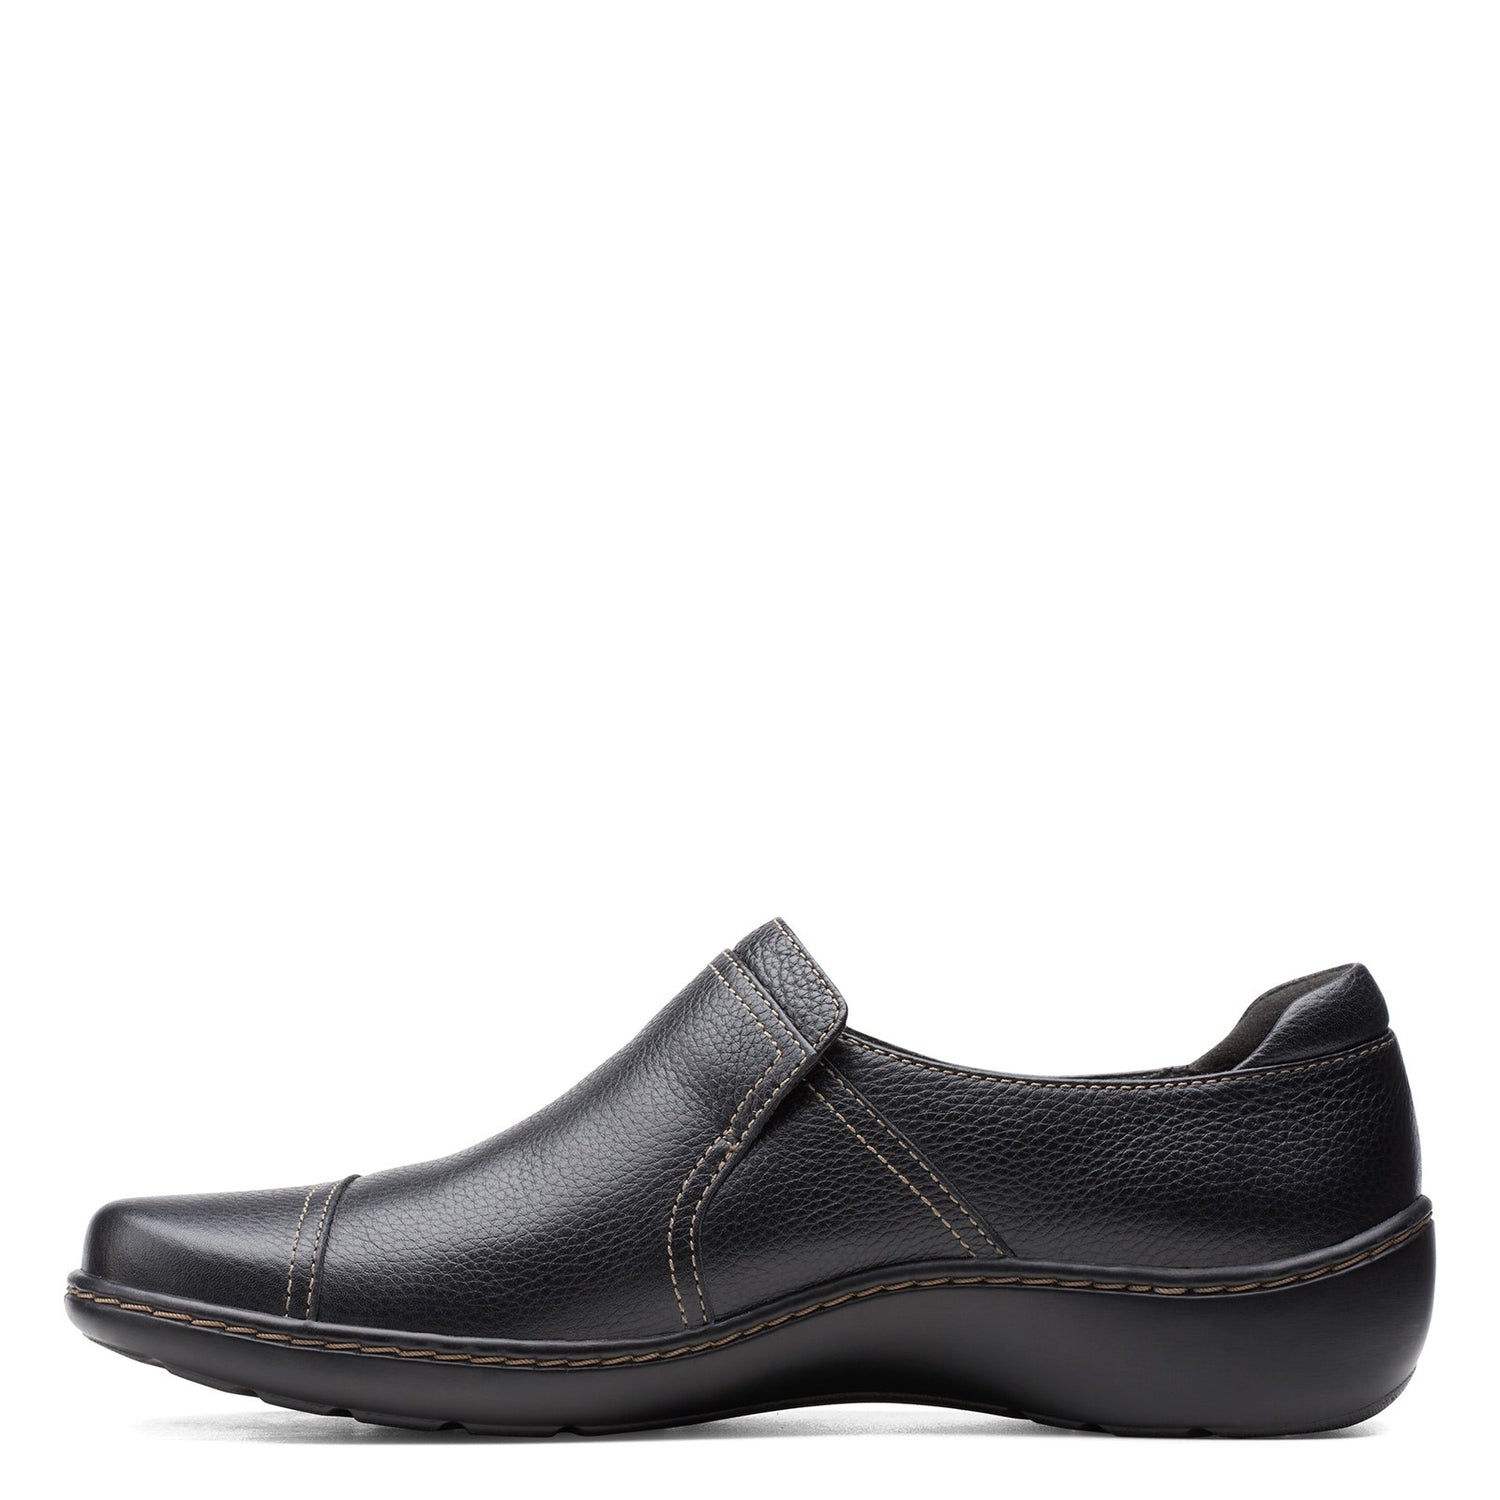 Peltz Shoes  Women's Clarks Cora Poppy Slip-On BLACK SMOOTH 26156827